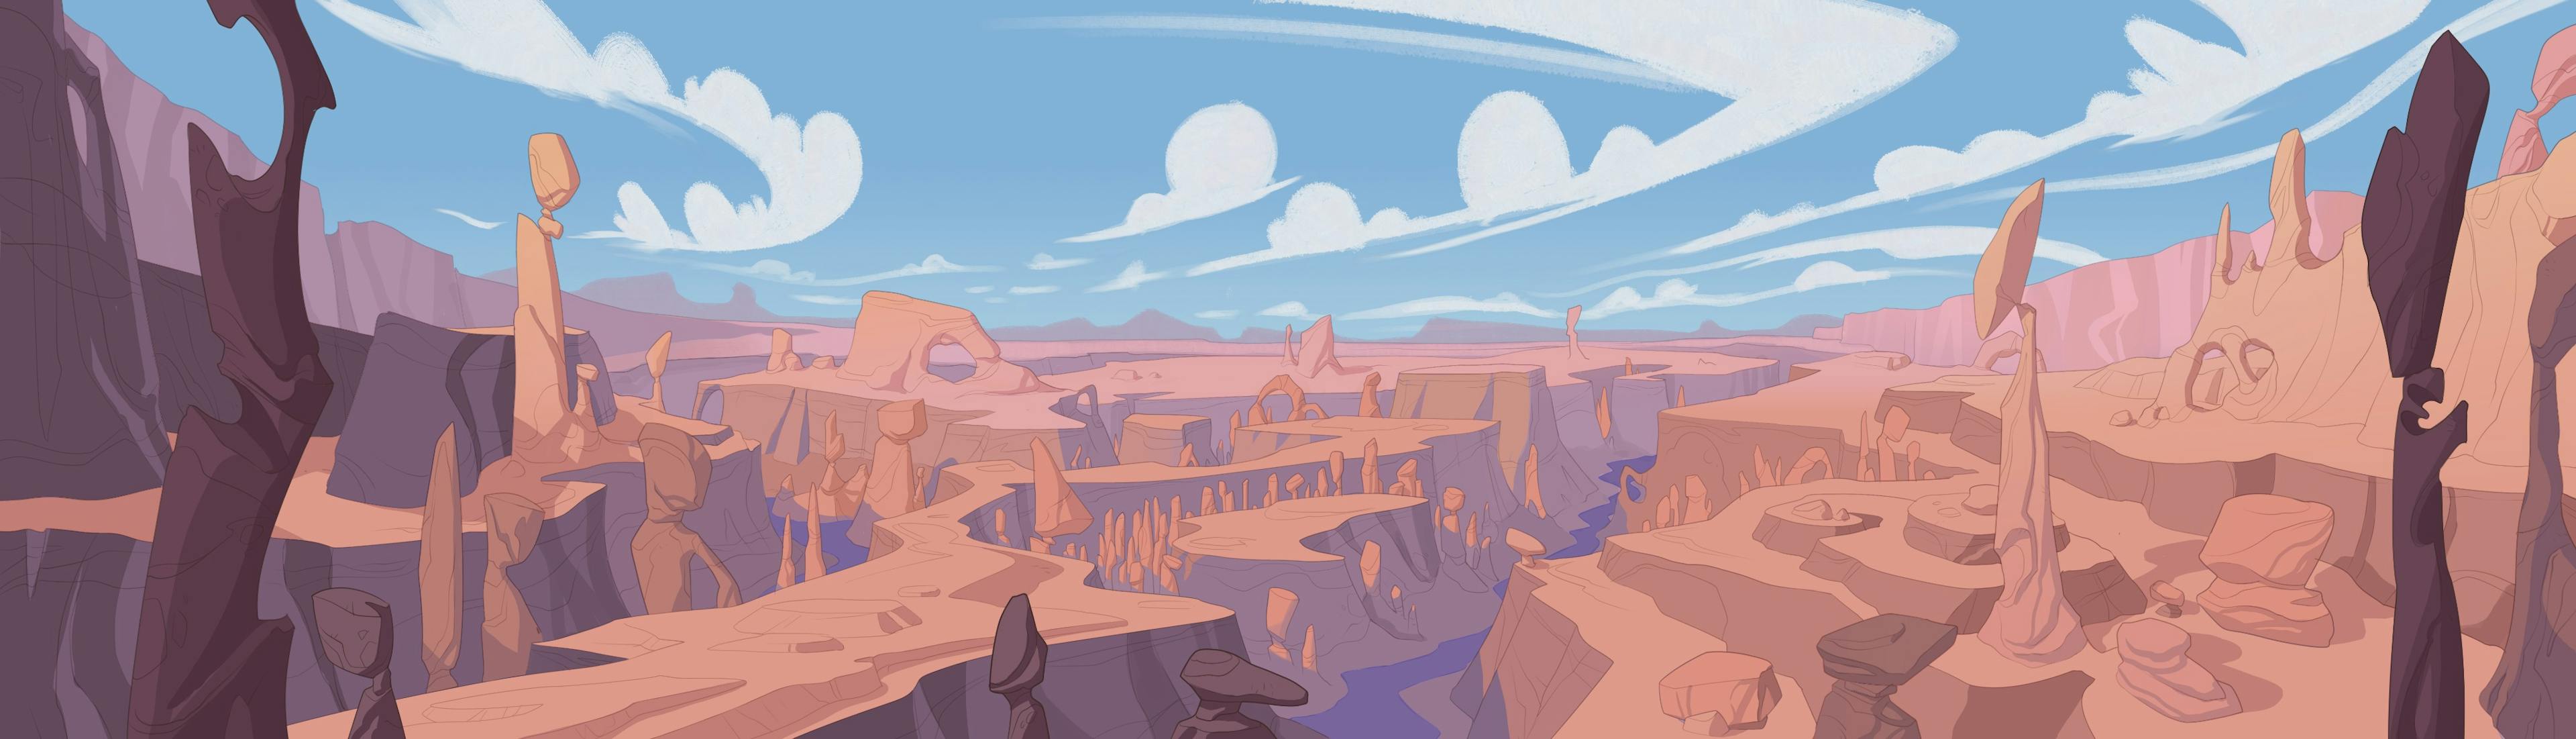 A desert canyon landscape